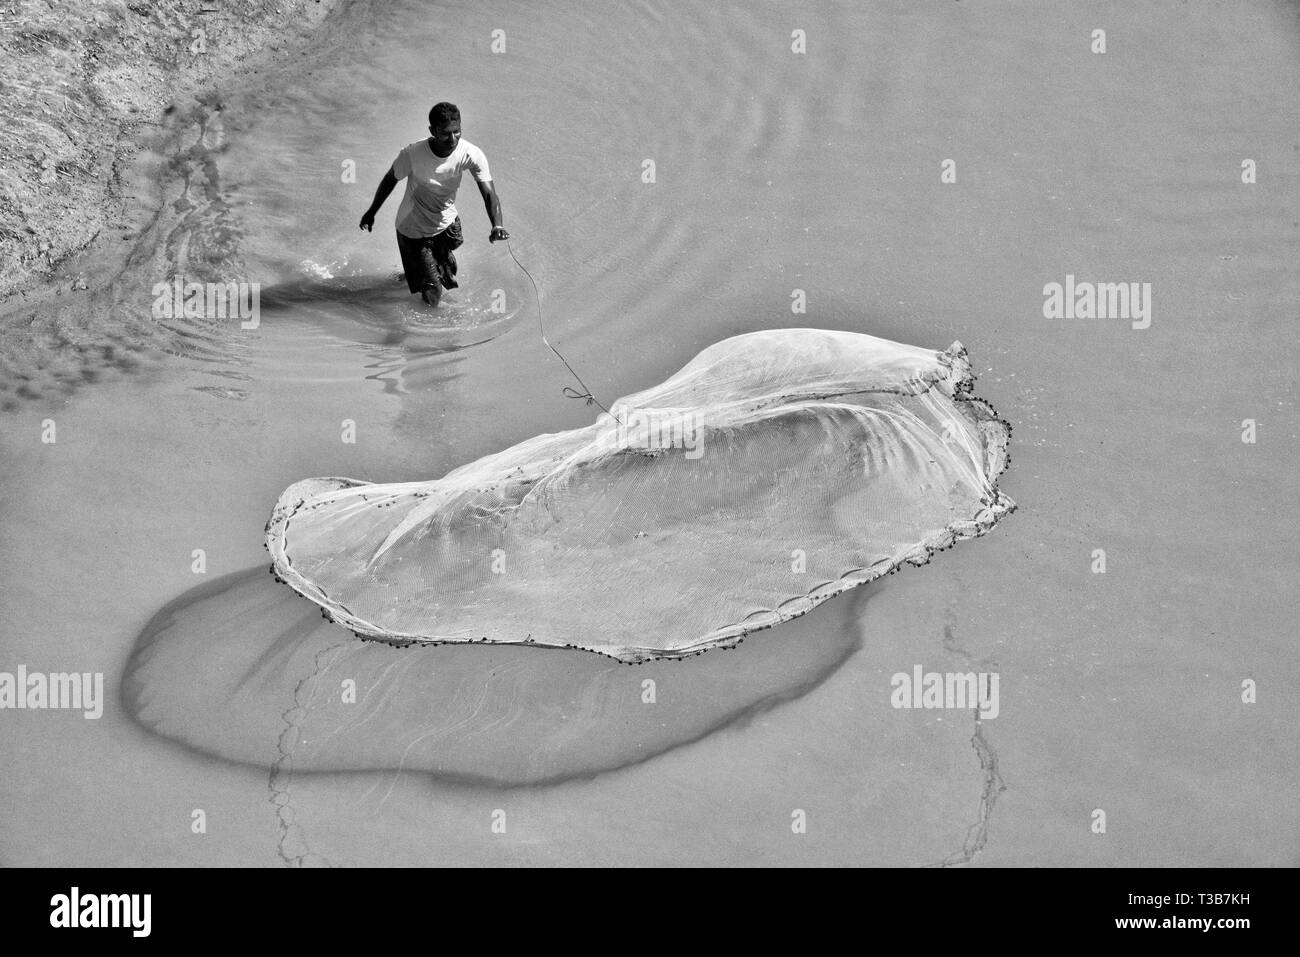 Fischer casting Fisch net auf dem Fluss, Chittagong, Division Chittagong, Bangladesch Stockfoto